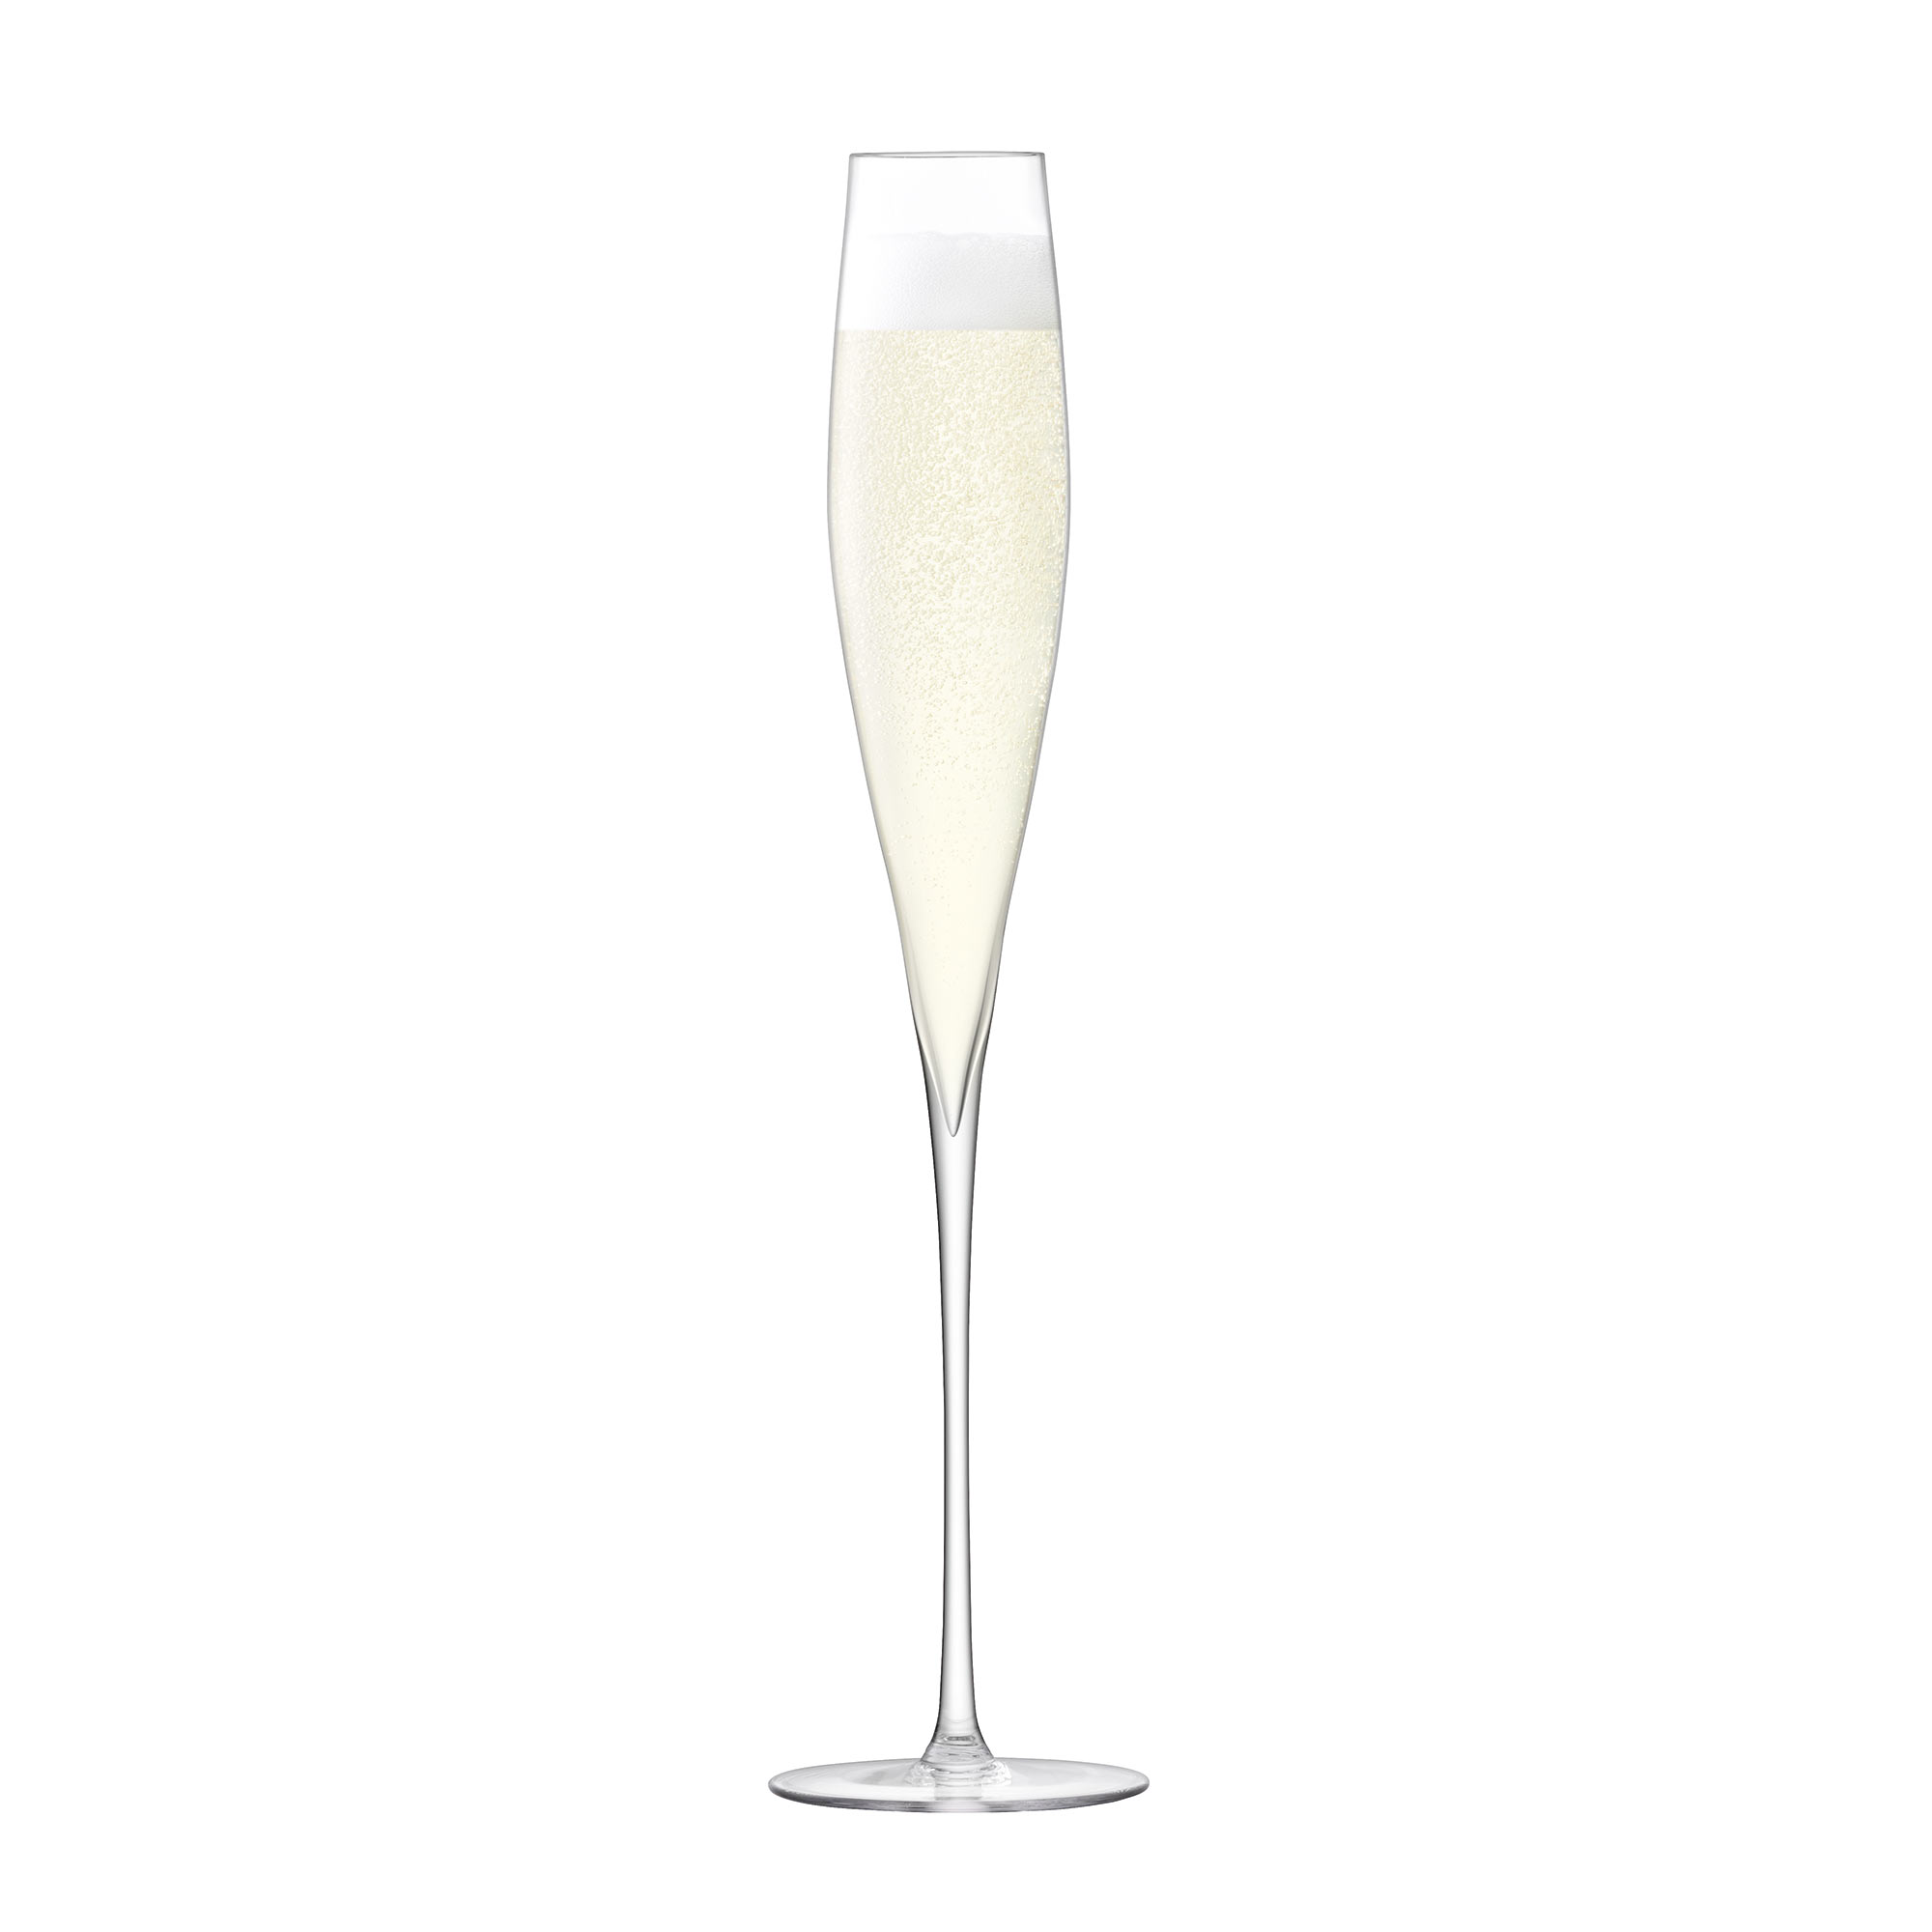 Lsa Celebrate Champagne Flute 7oz 200ml Drinkstuff